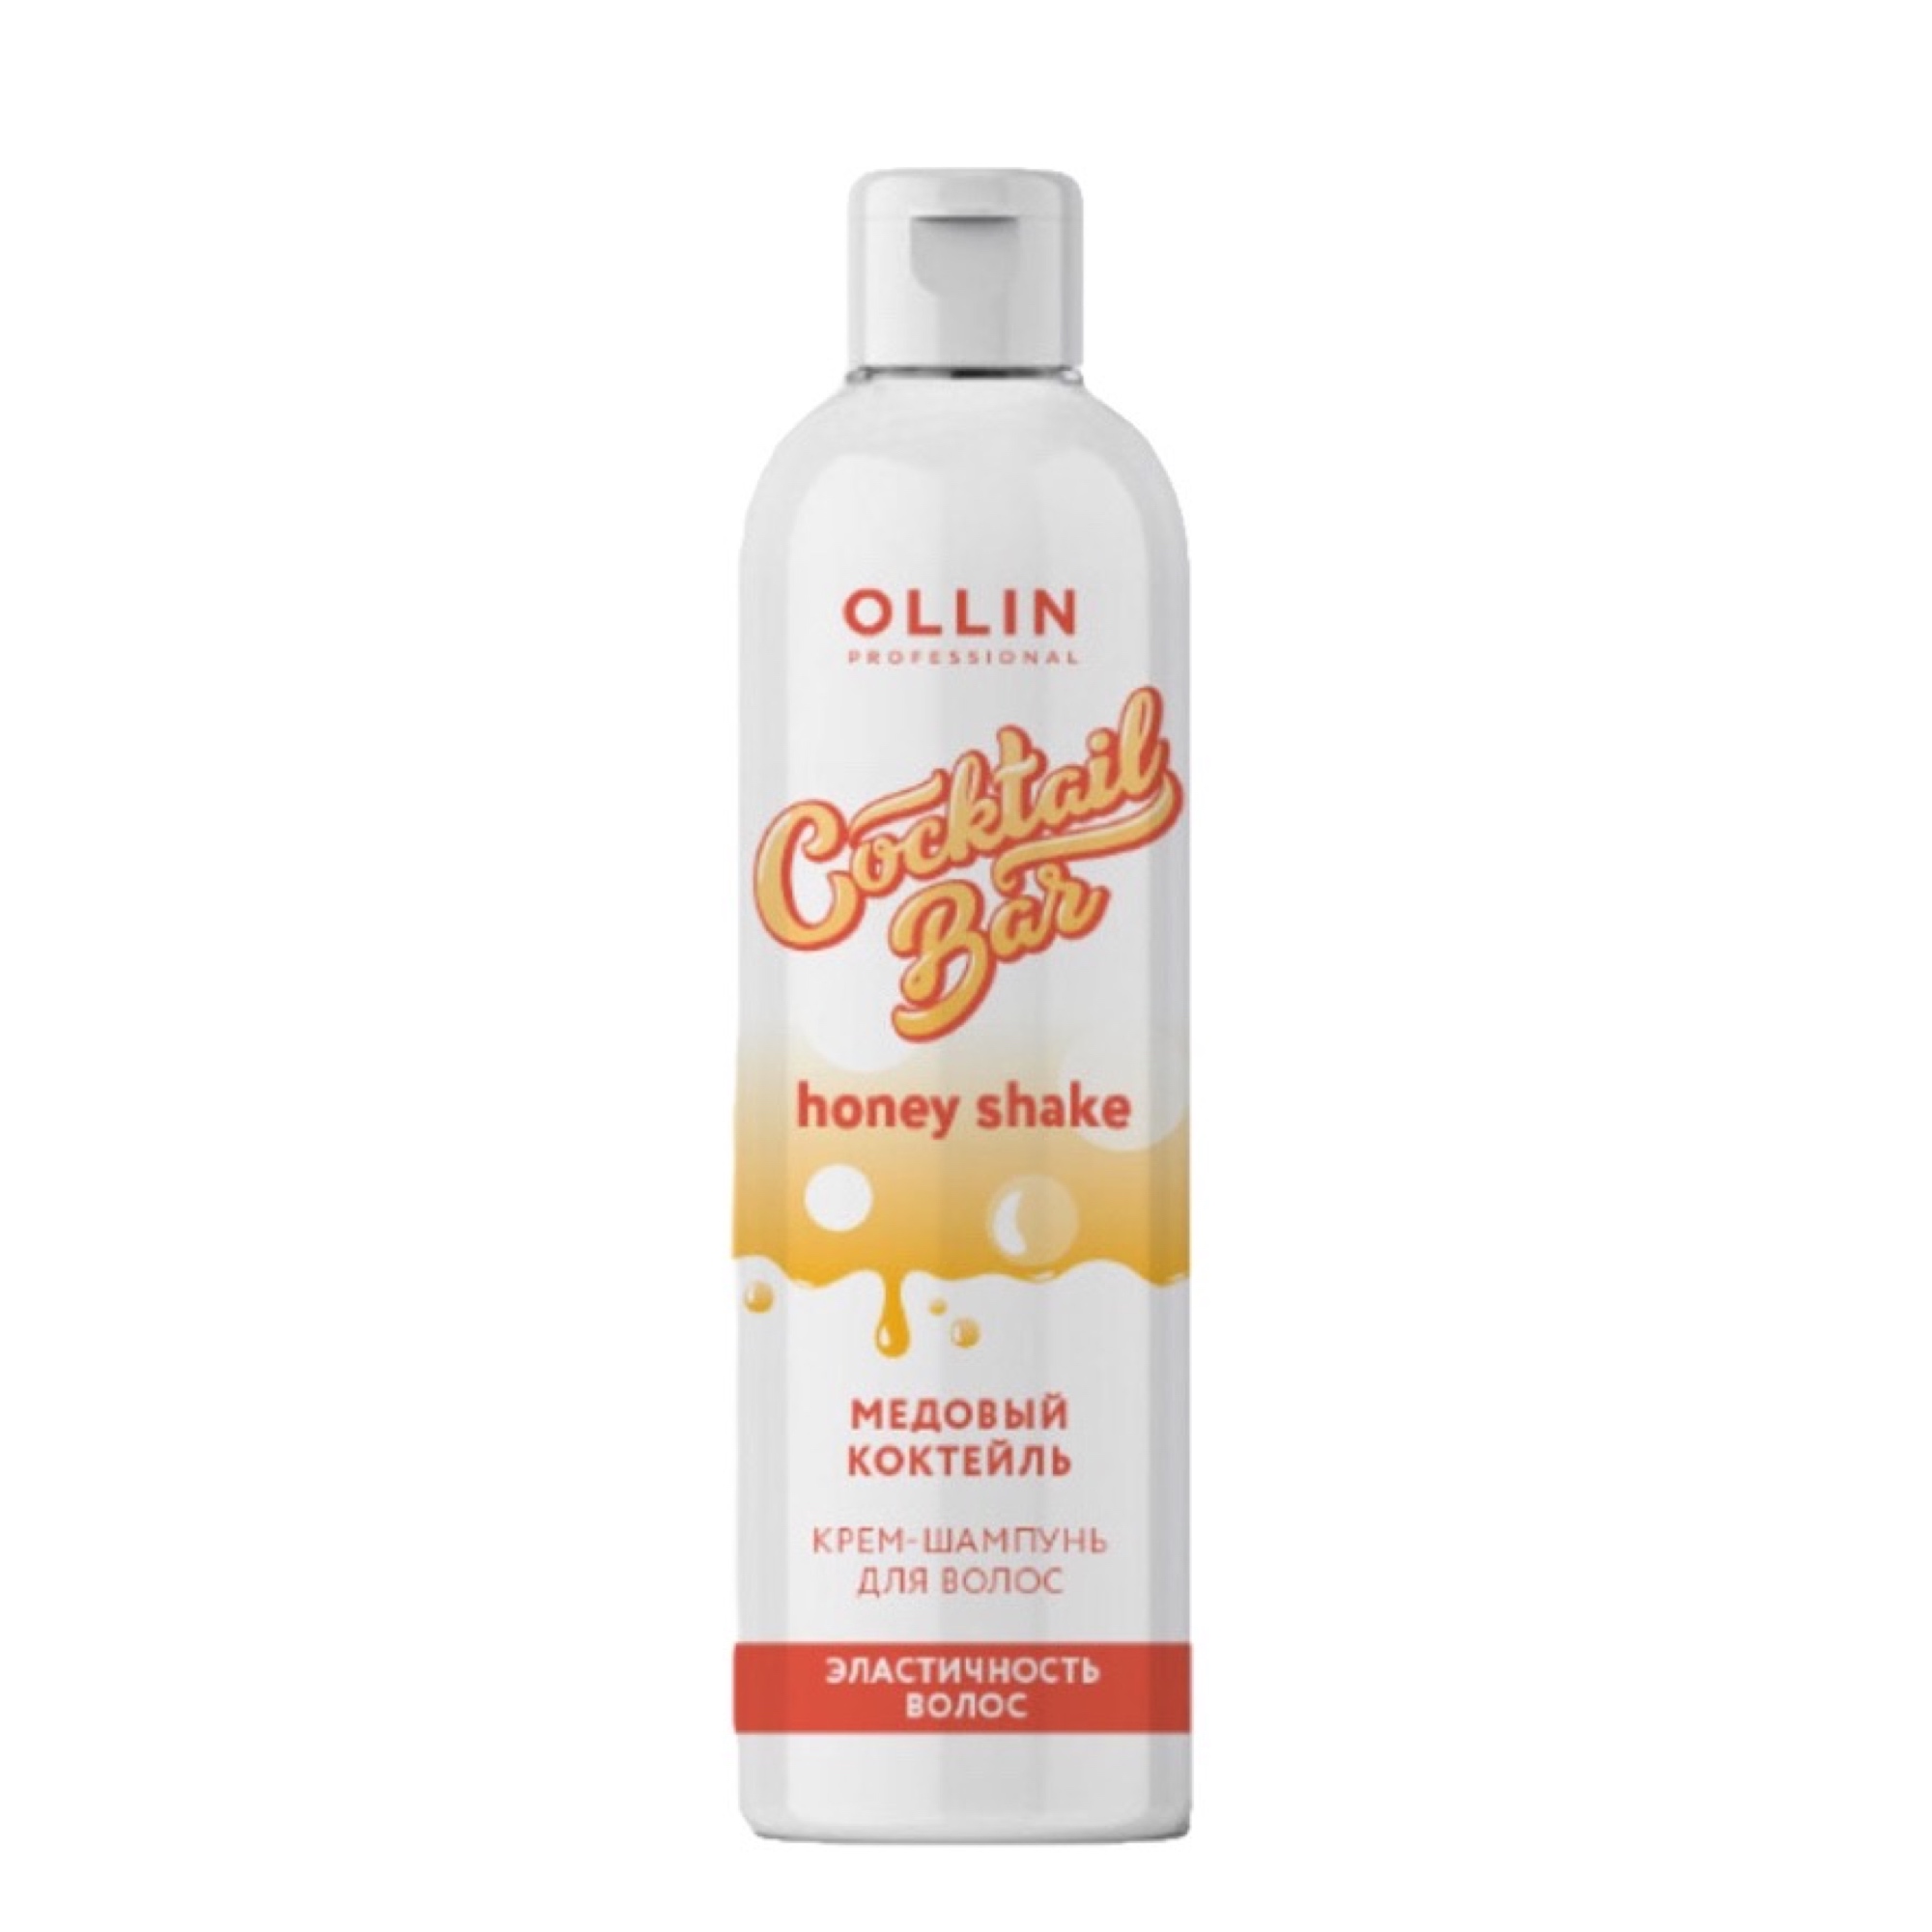 Ollin Professional Крем-шампунь Медовый коктейль для эласт